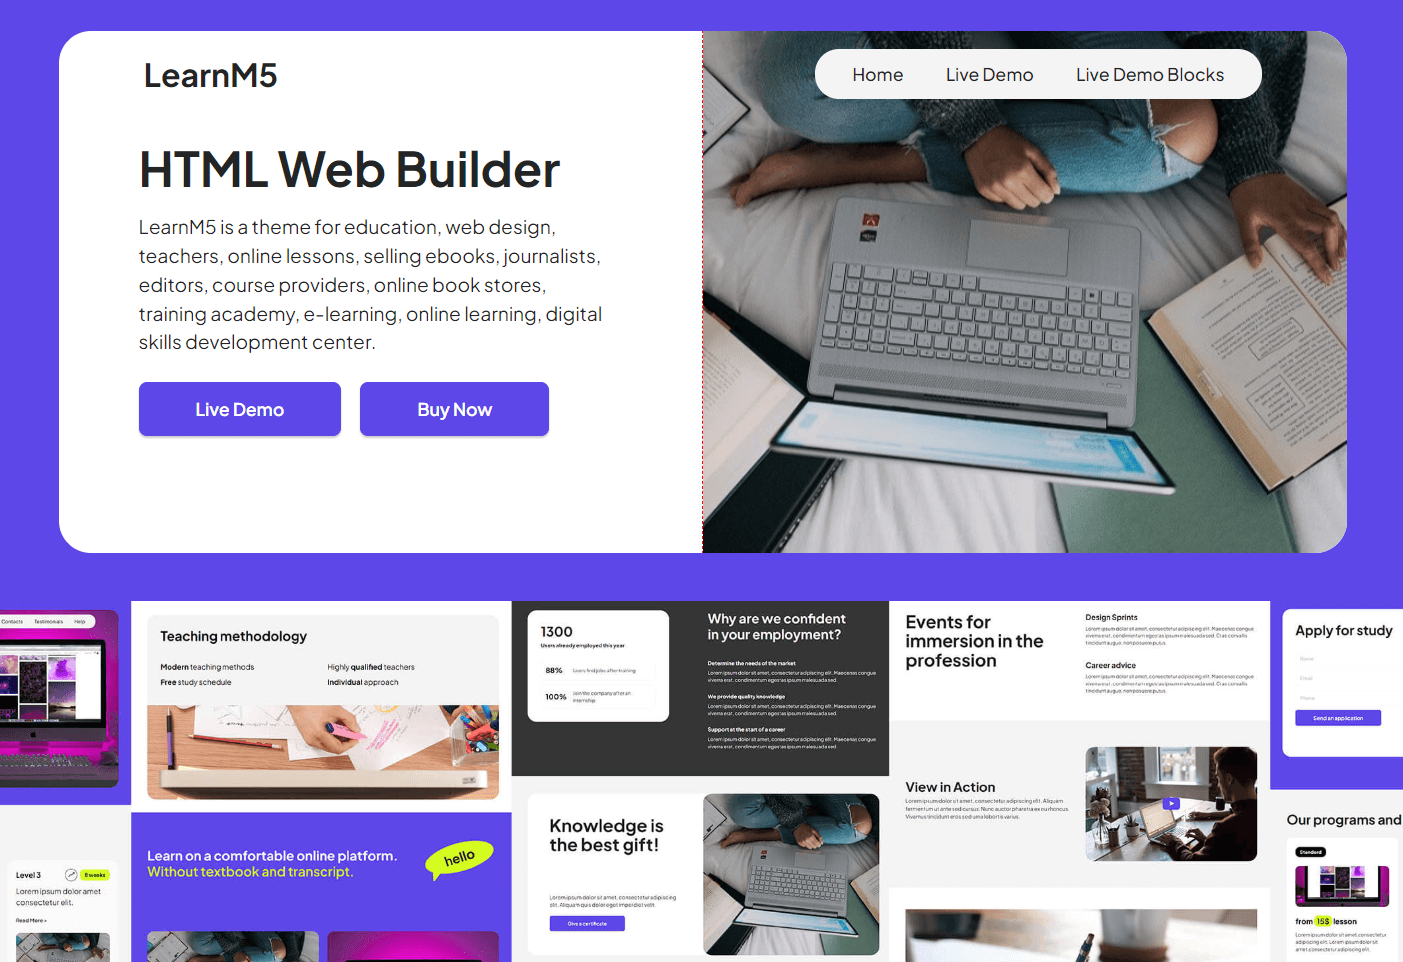  HTML Website Builder Software